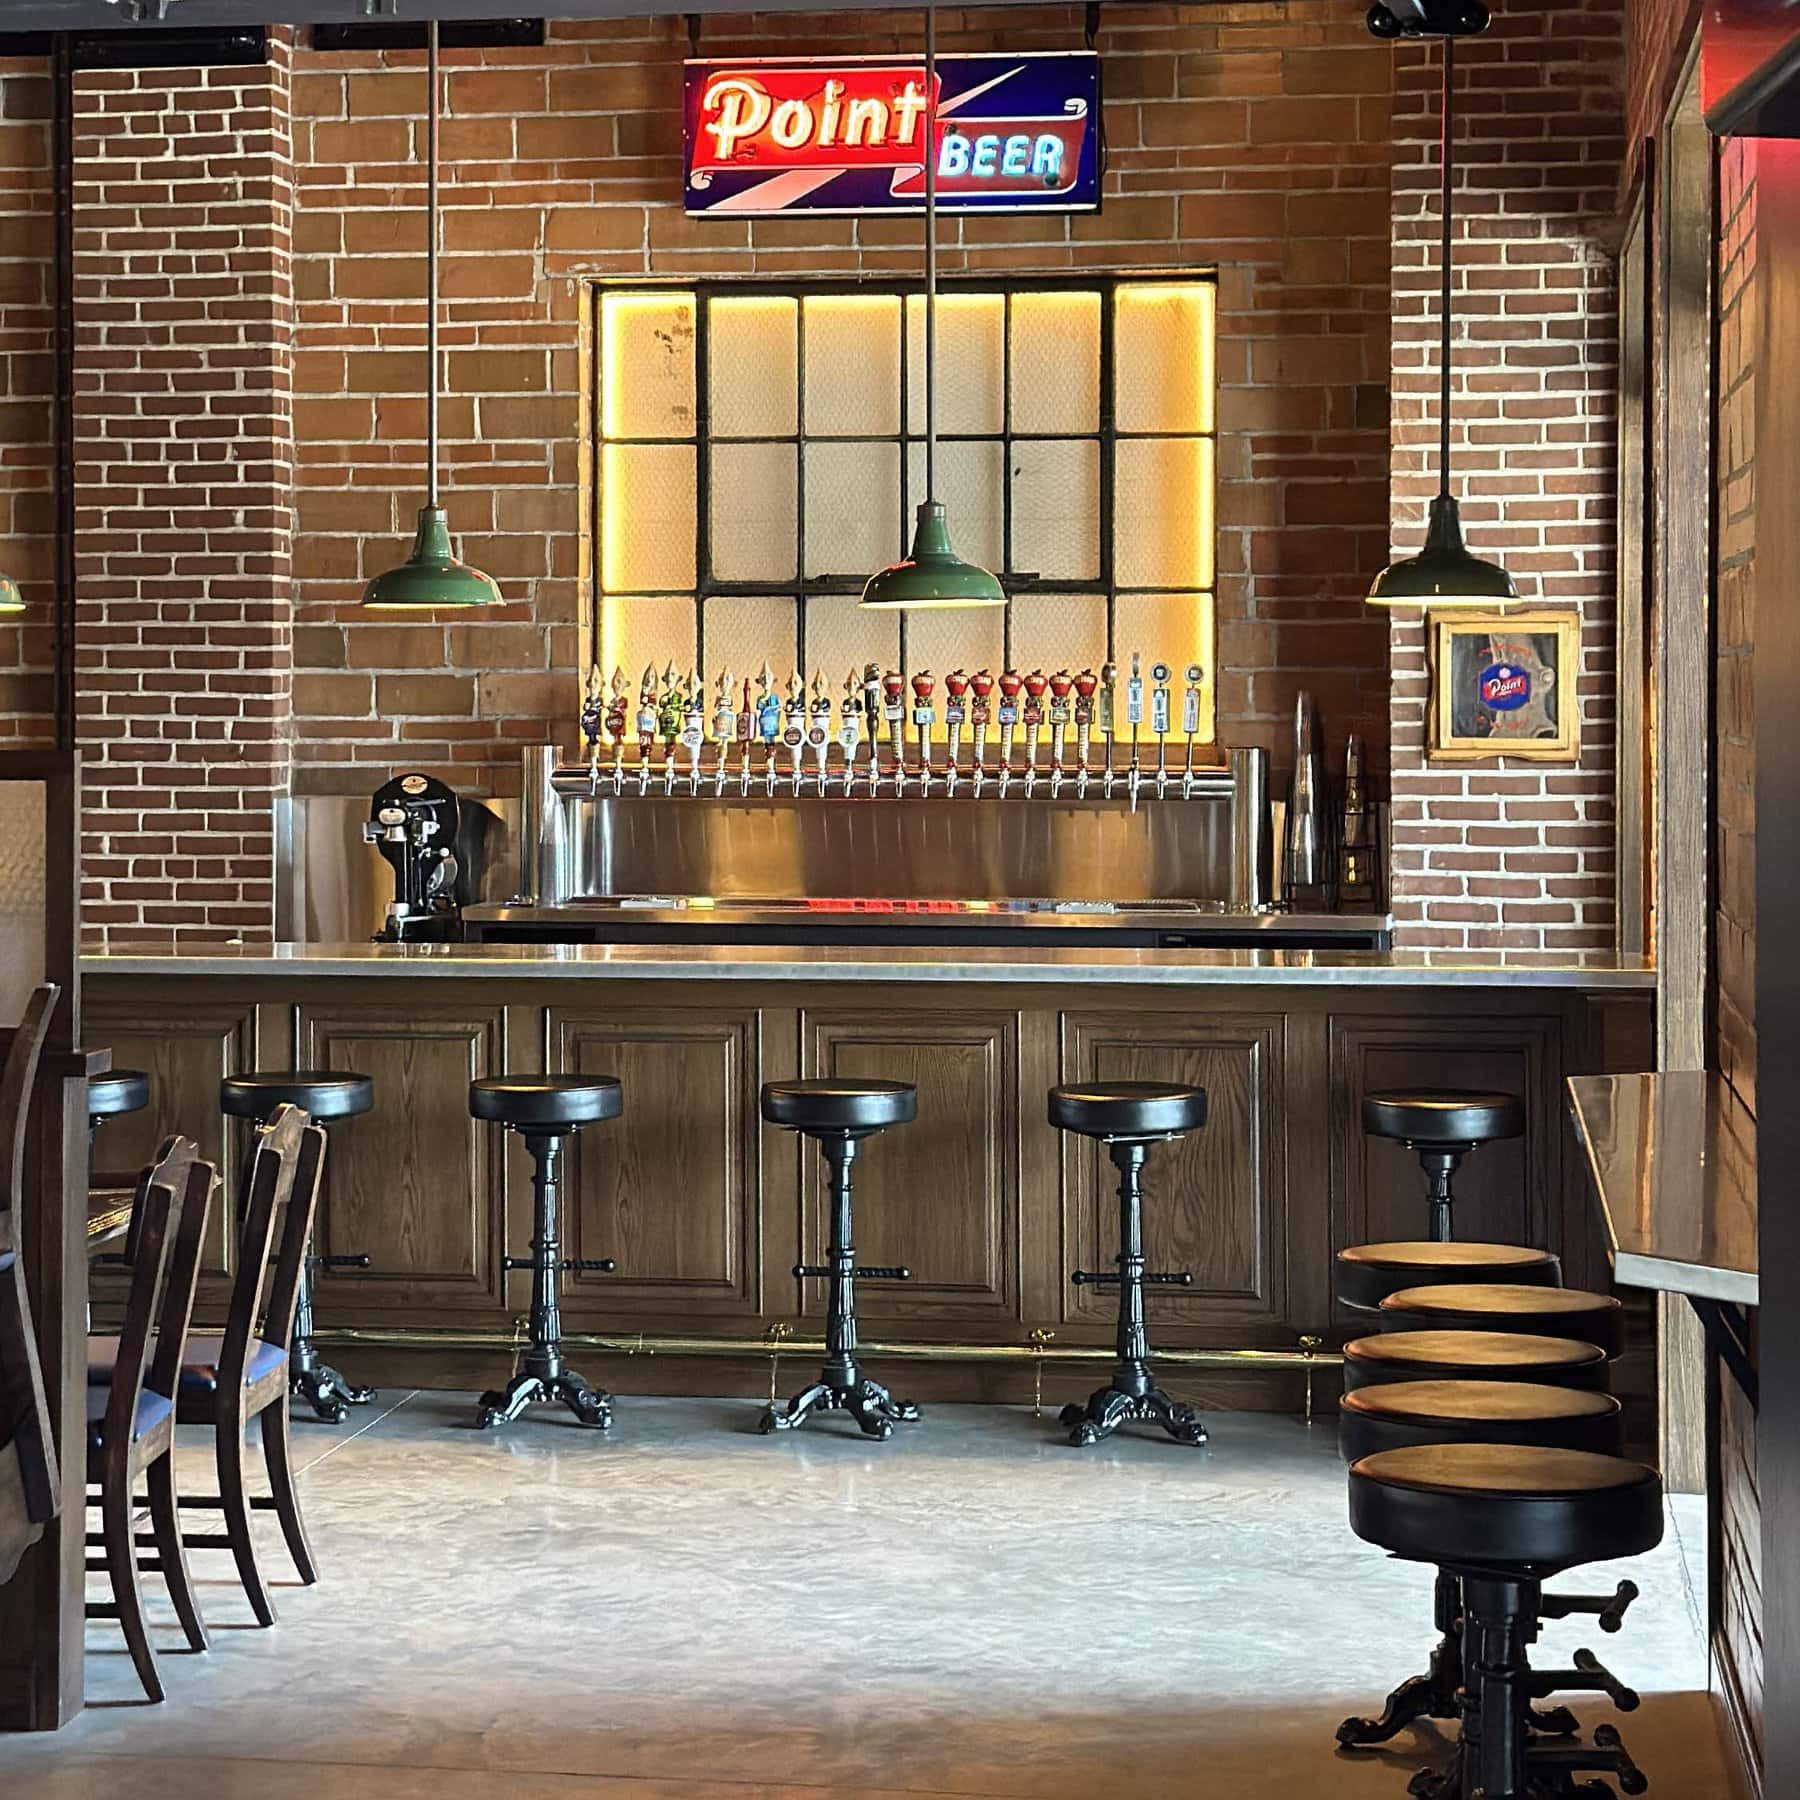 Vintage bar interior with beer taps